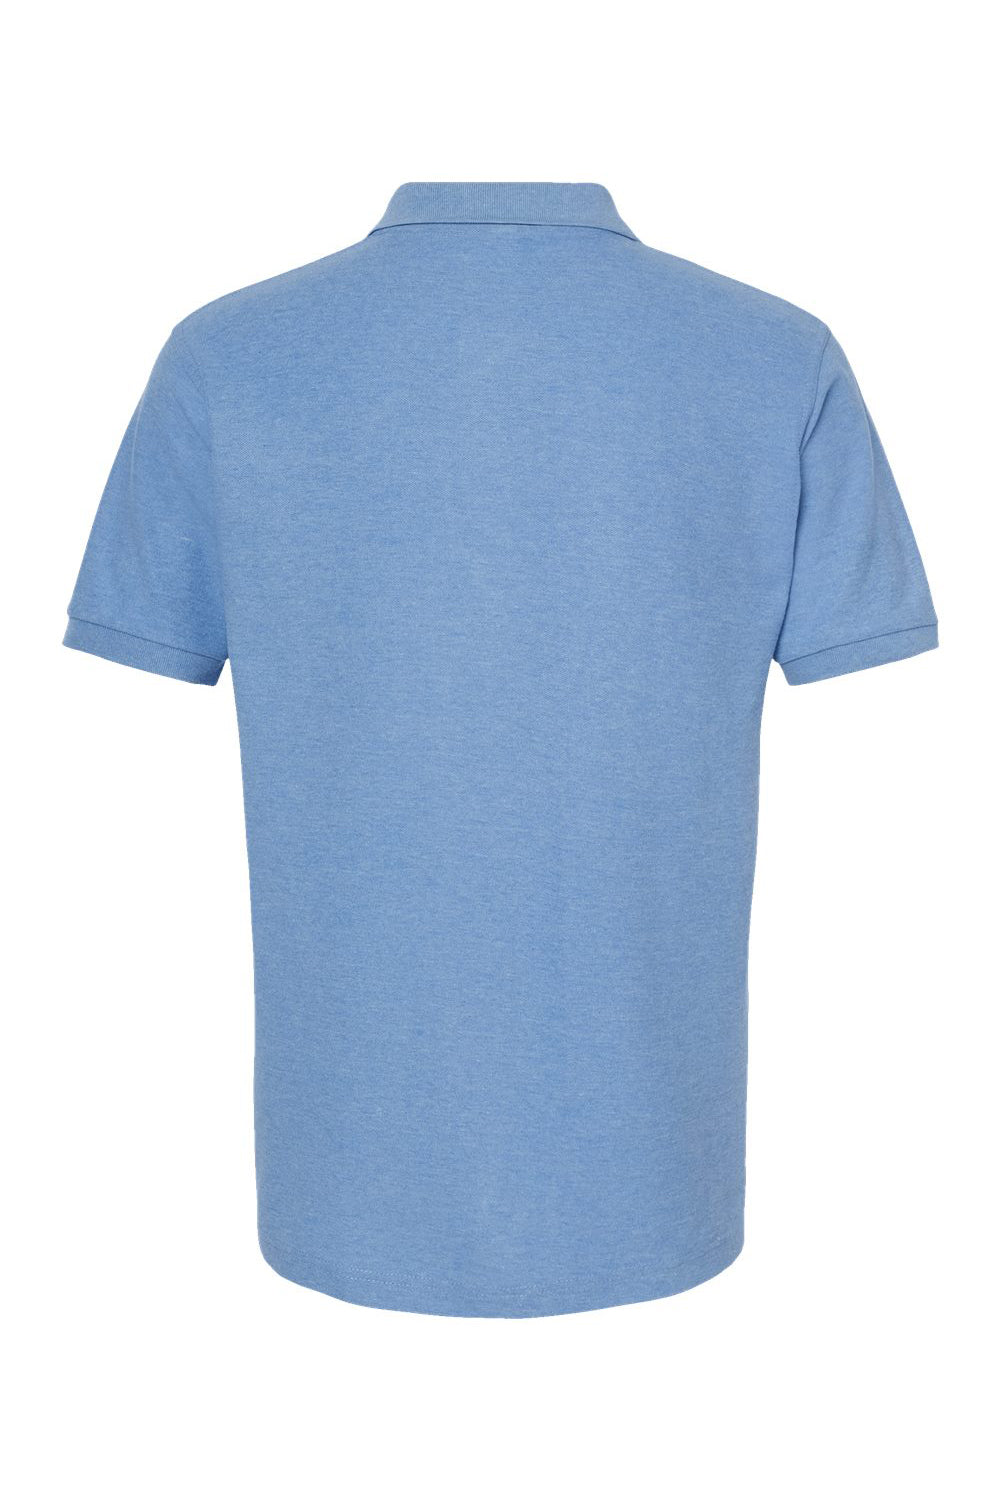 Tultex 400 Mens Sport Shirt Sleeve Polo Shirt Heather Light Blue Flat Back